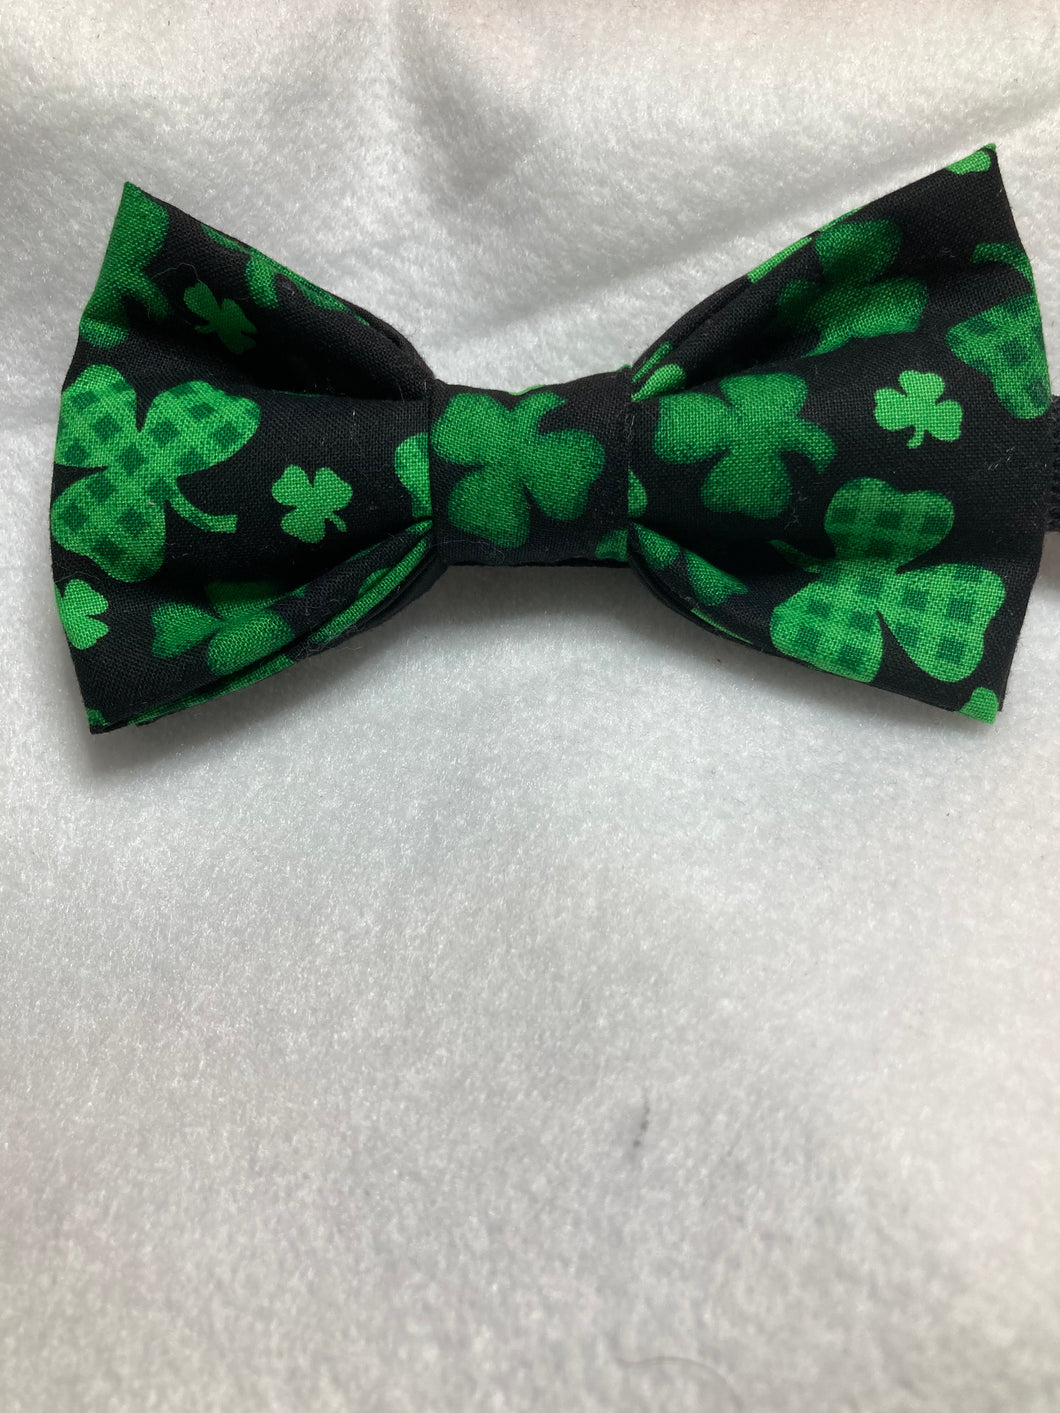 Shamrock ,Irish Pride themed cotton bow tie , pre-tied with adjustable black cotton twill strap